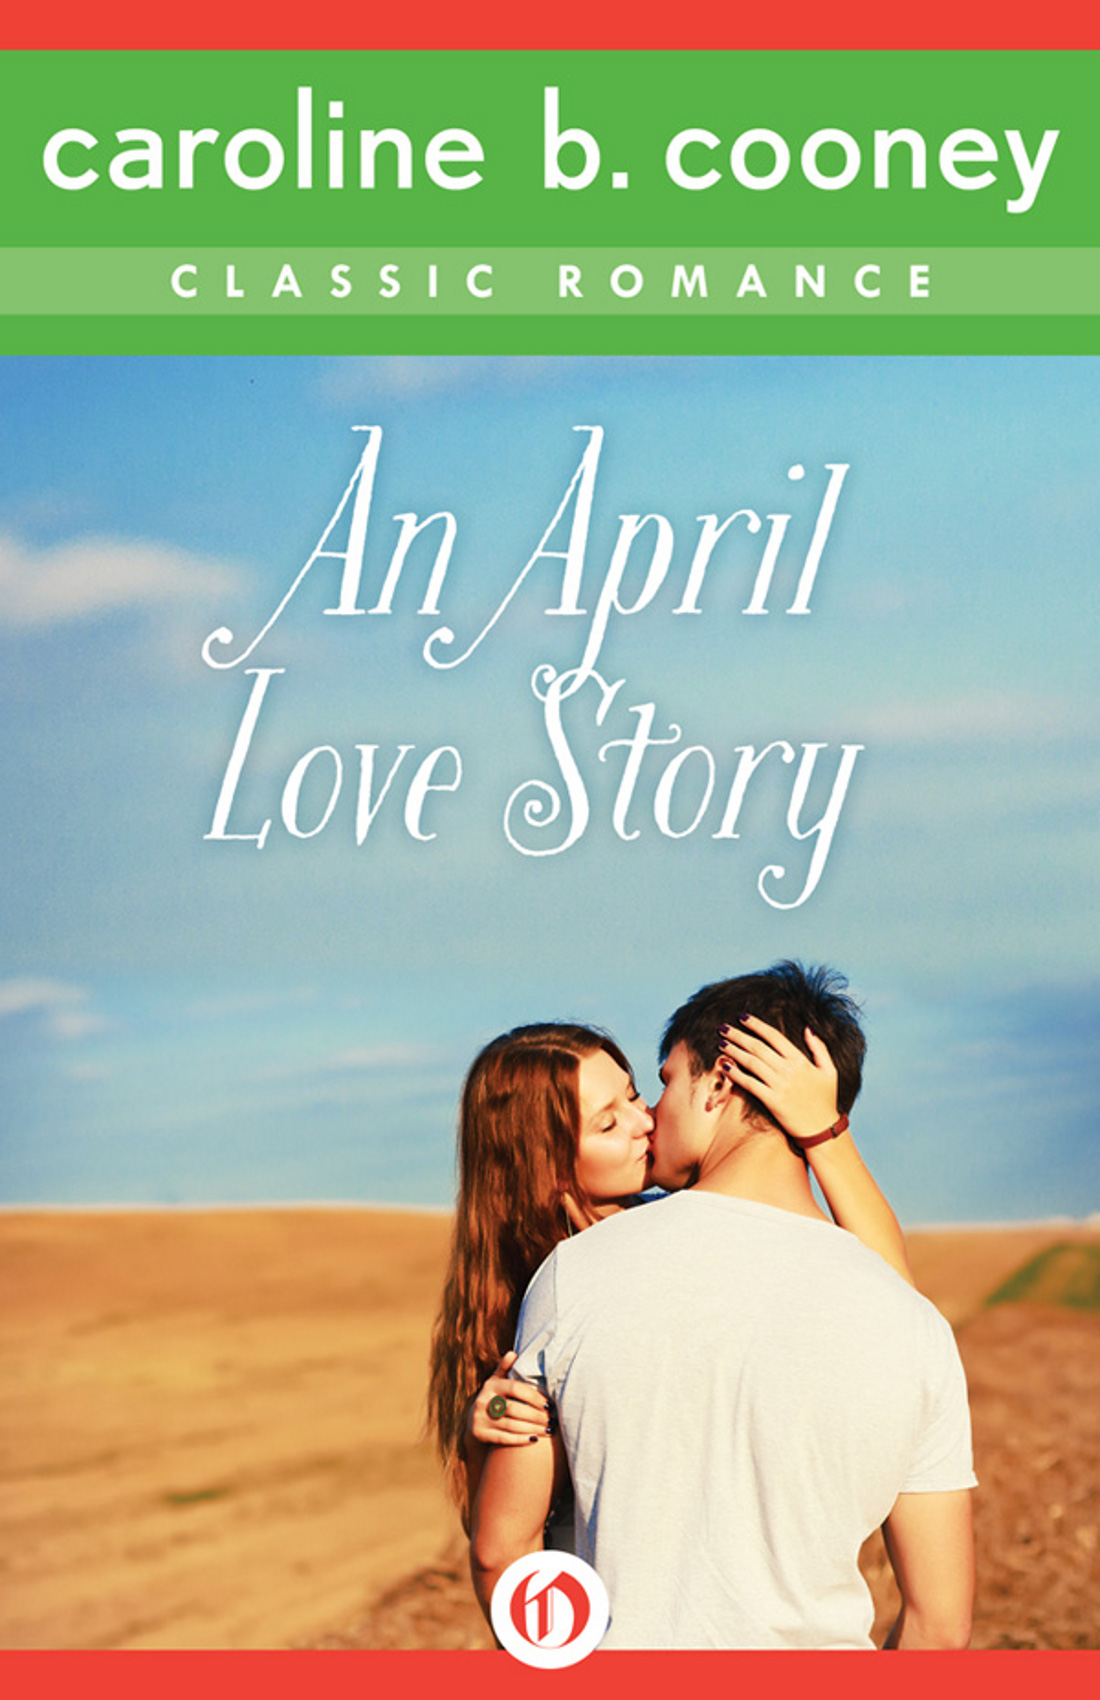 April Love Story by Caroline B. Cooney